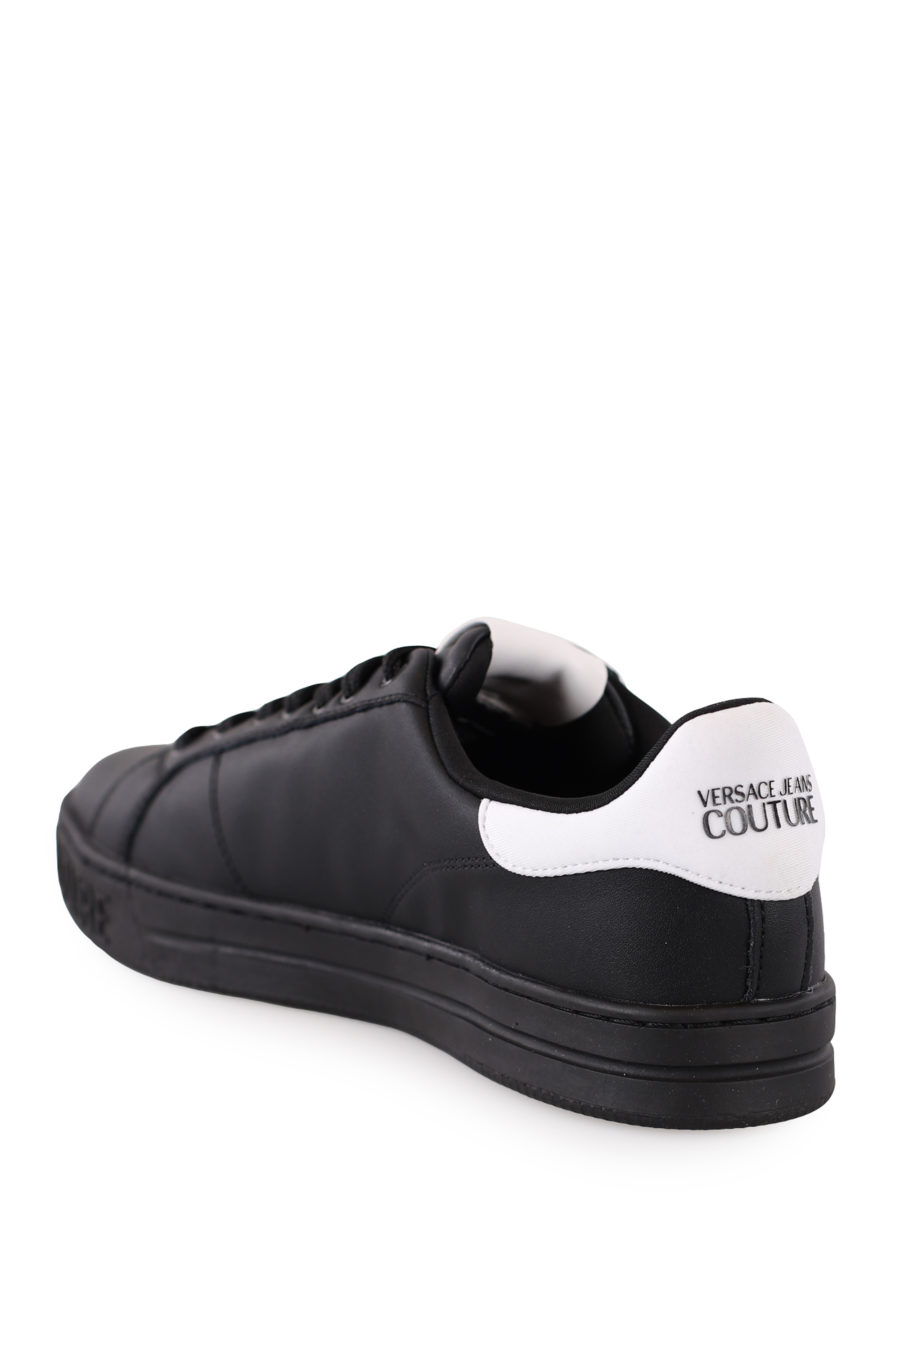 Zapatillas negras "Court 88" con logotipo blanco - IMG 9065